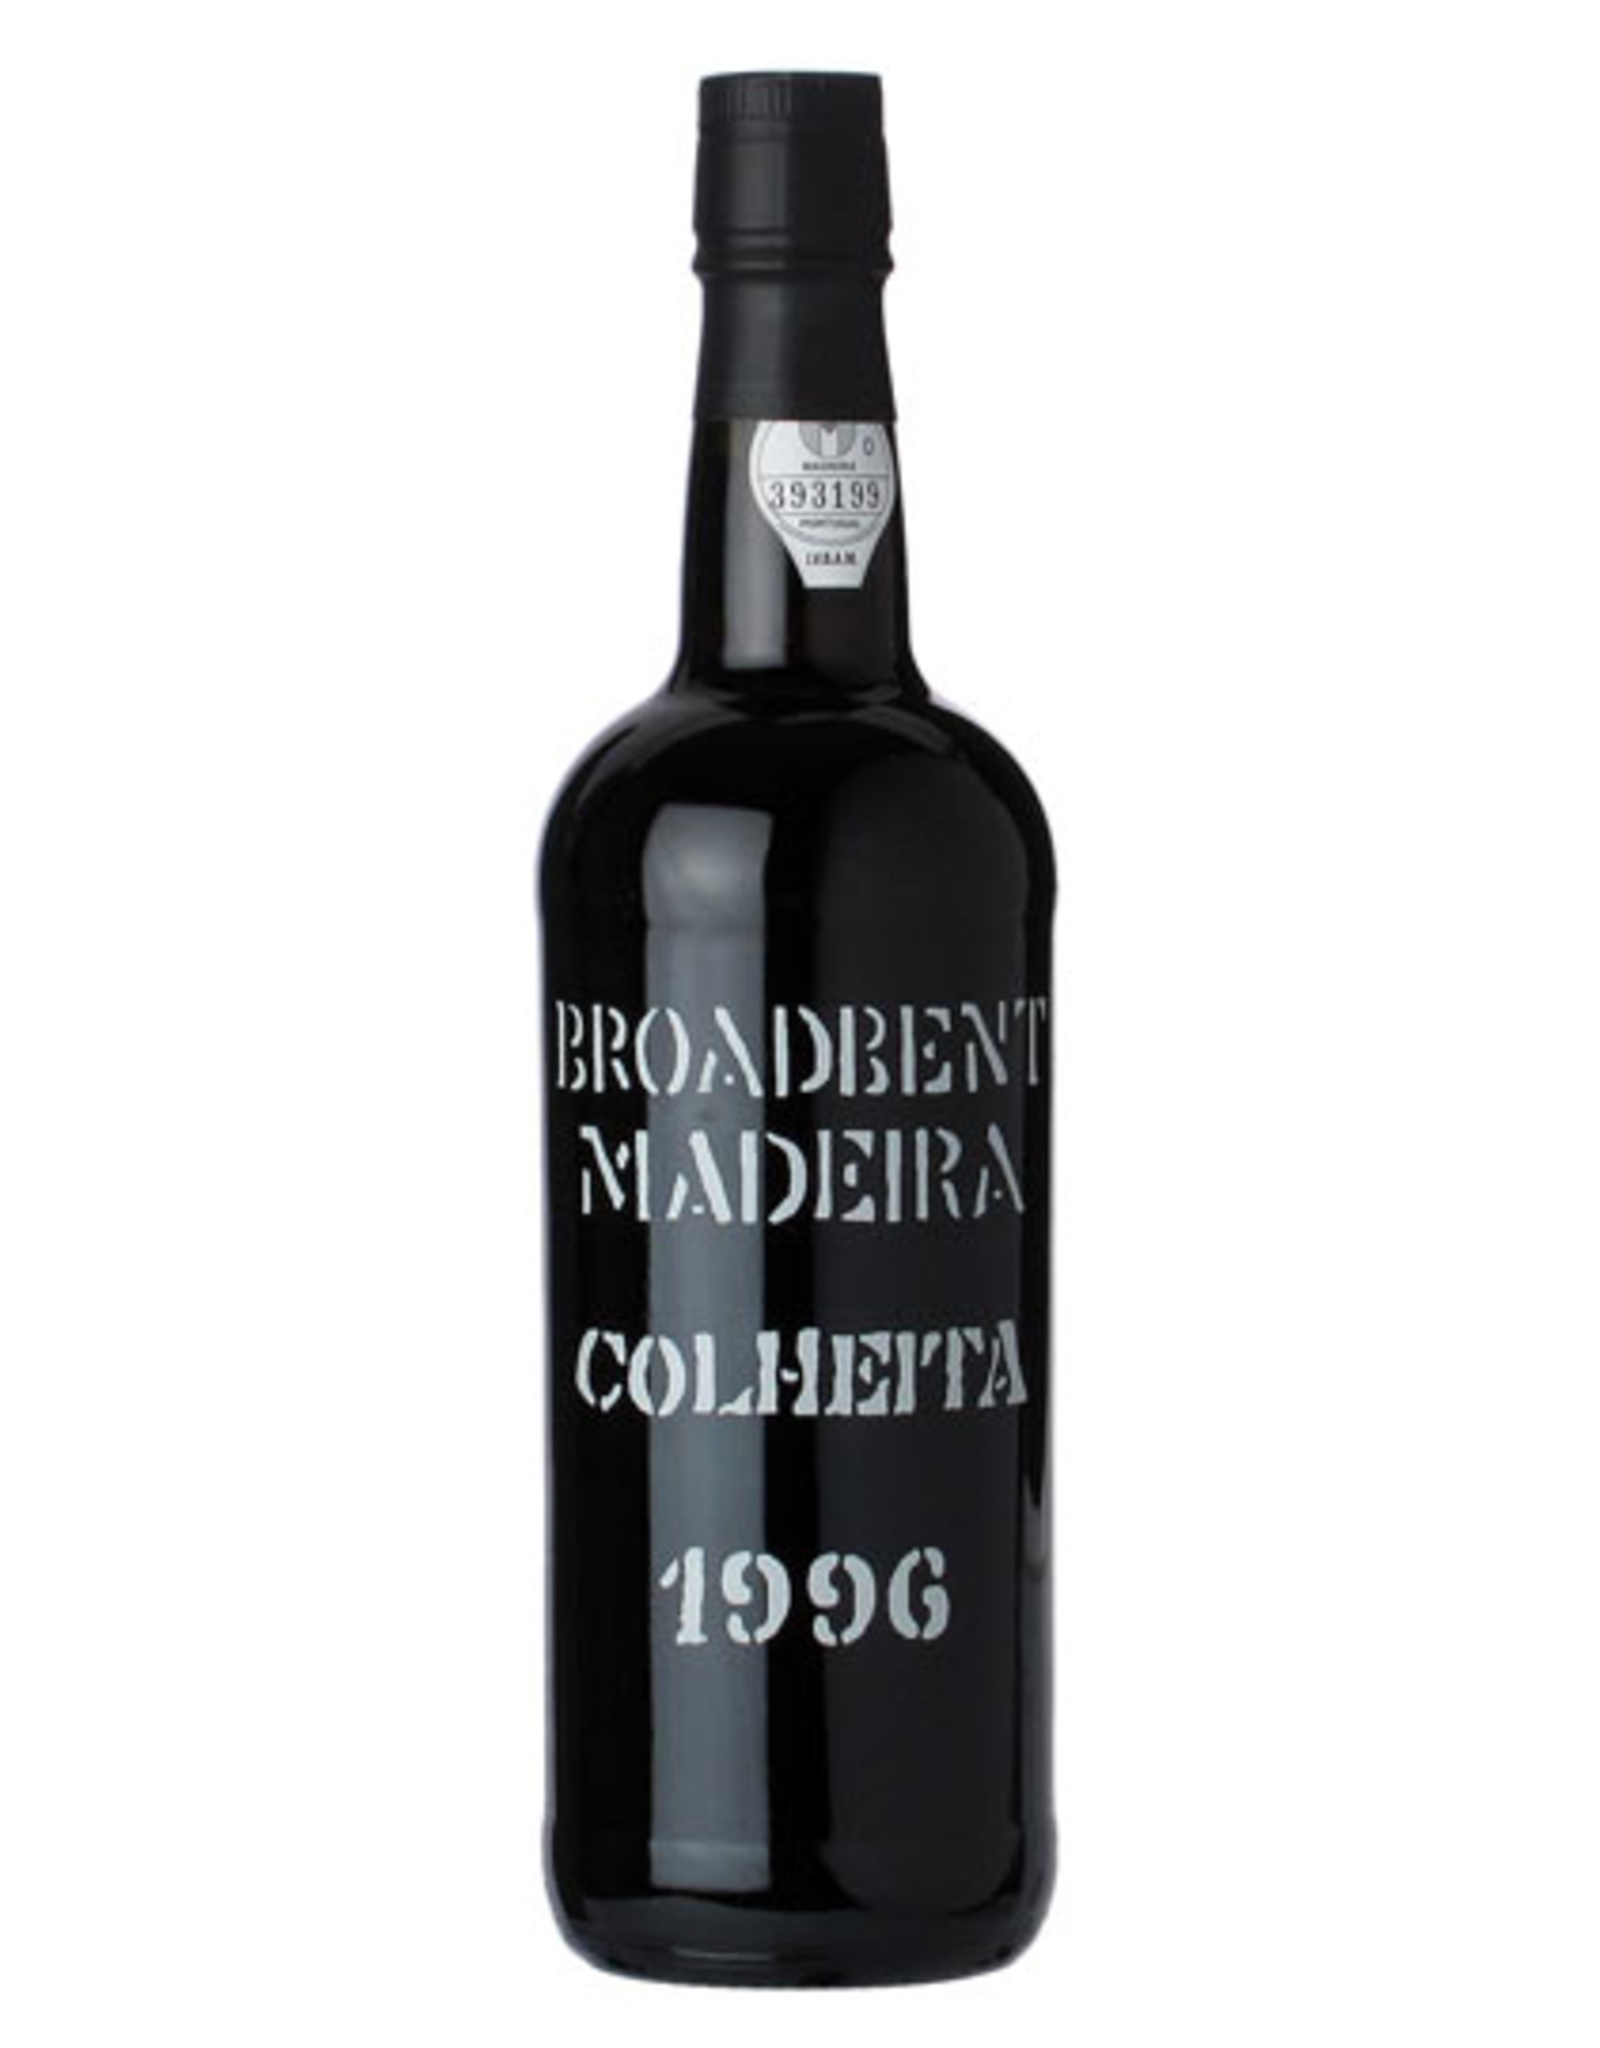 Desert Wine 1996, Broadbent Colheita, Madeira, Sta. Cruz, Madeira, Portugal, 19% Alc, CT92, TW93